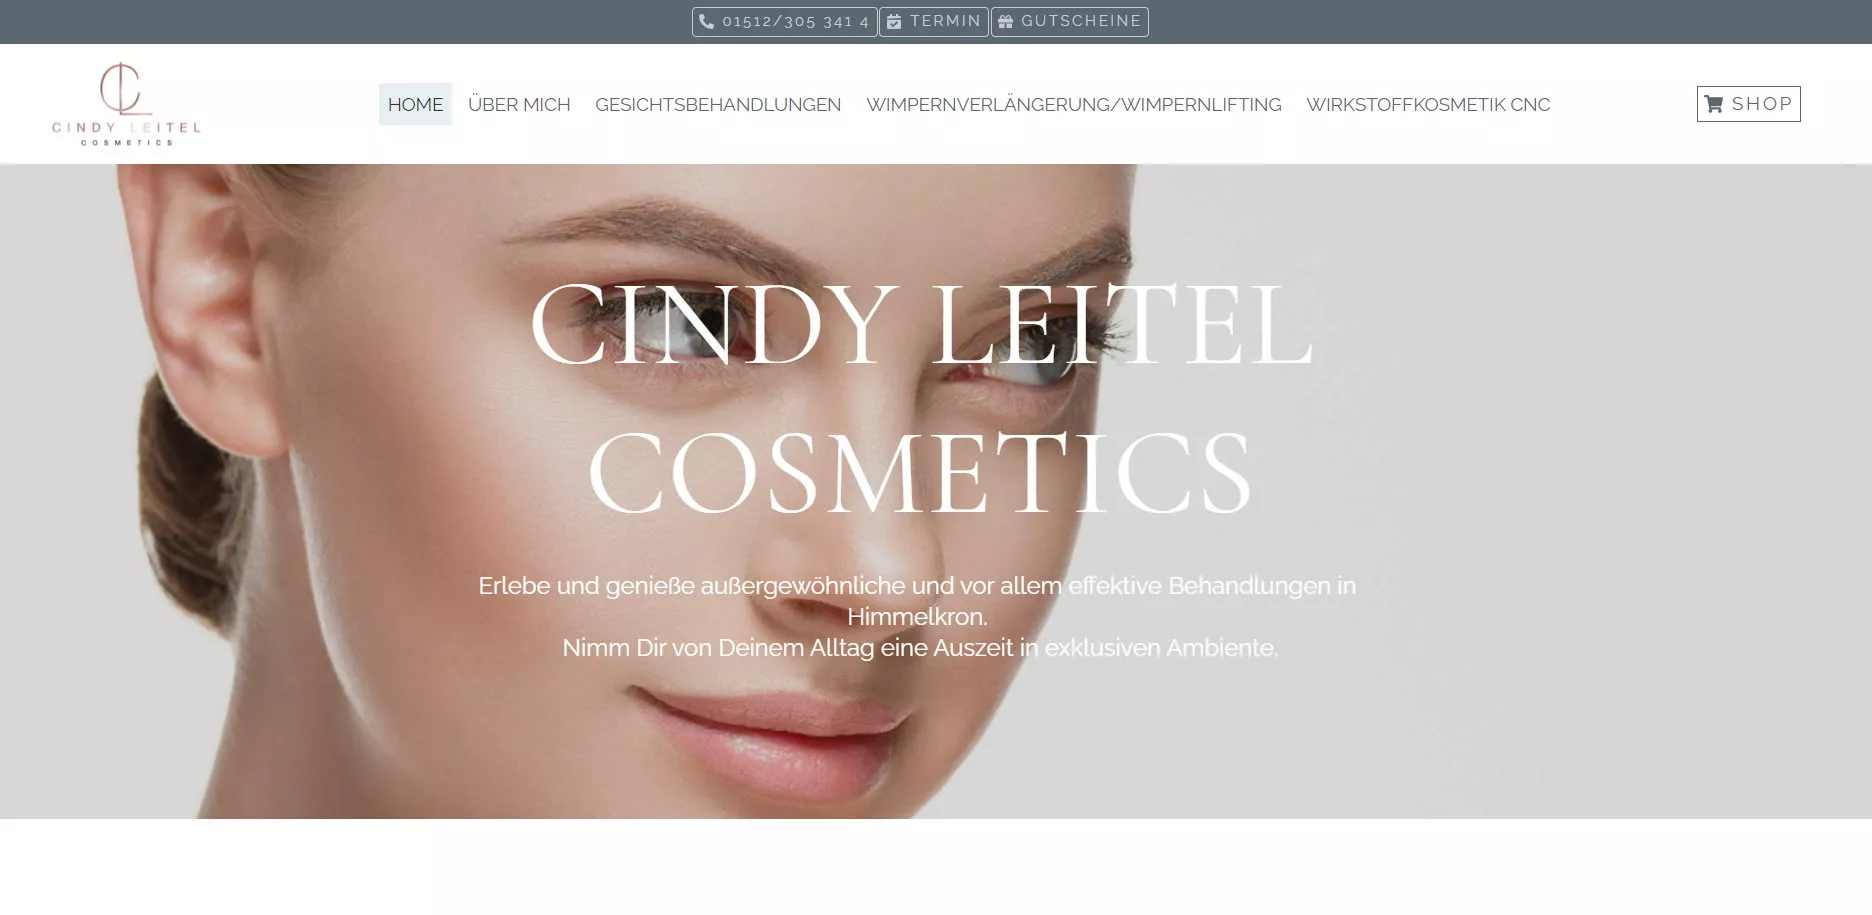 Cindy Leitel Cosmetics